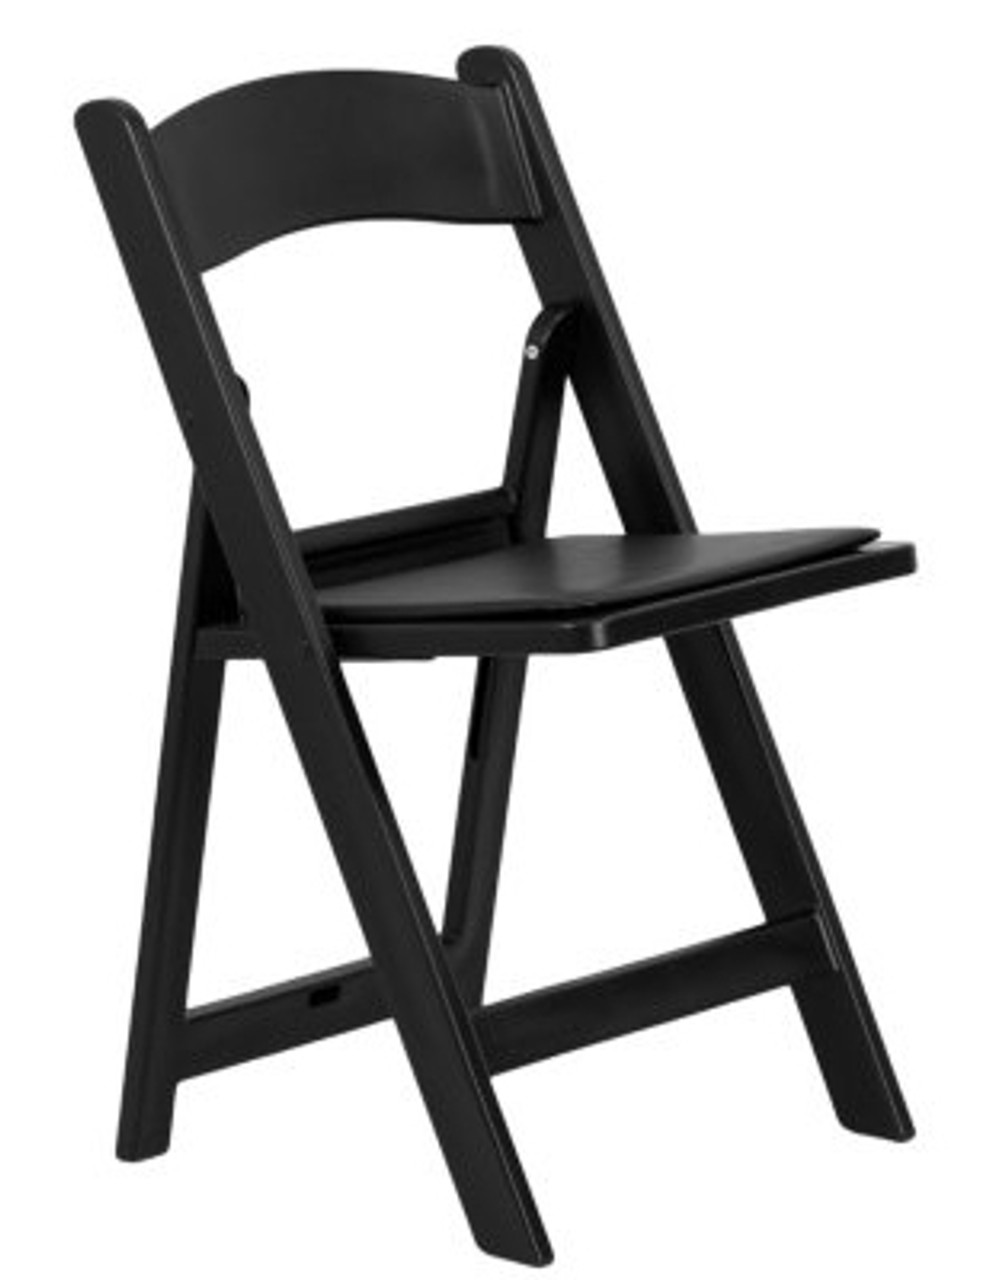 Resin Folding Padded Chair   Black.1  88751.1562675746 ?c=2